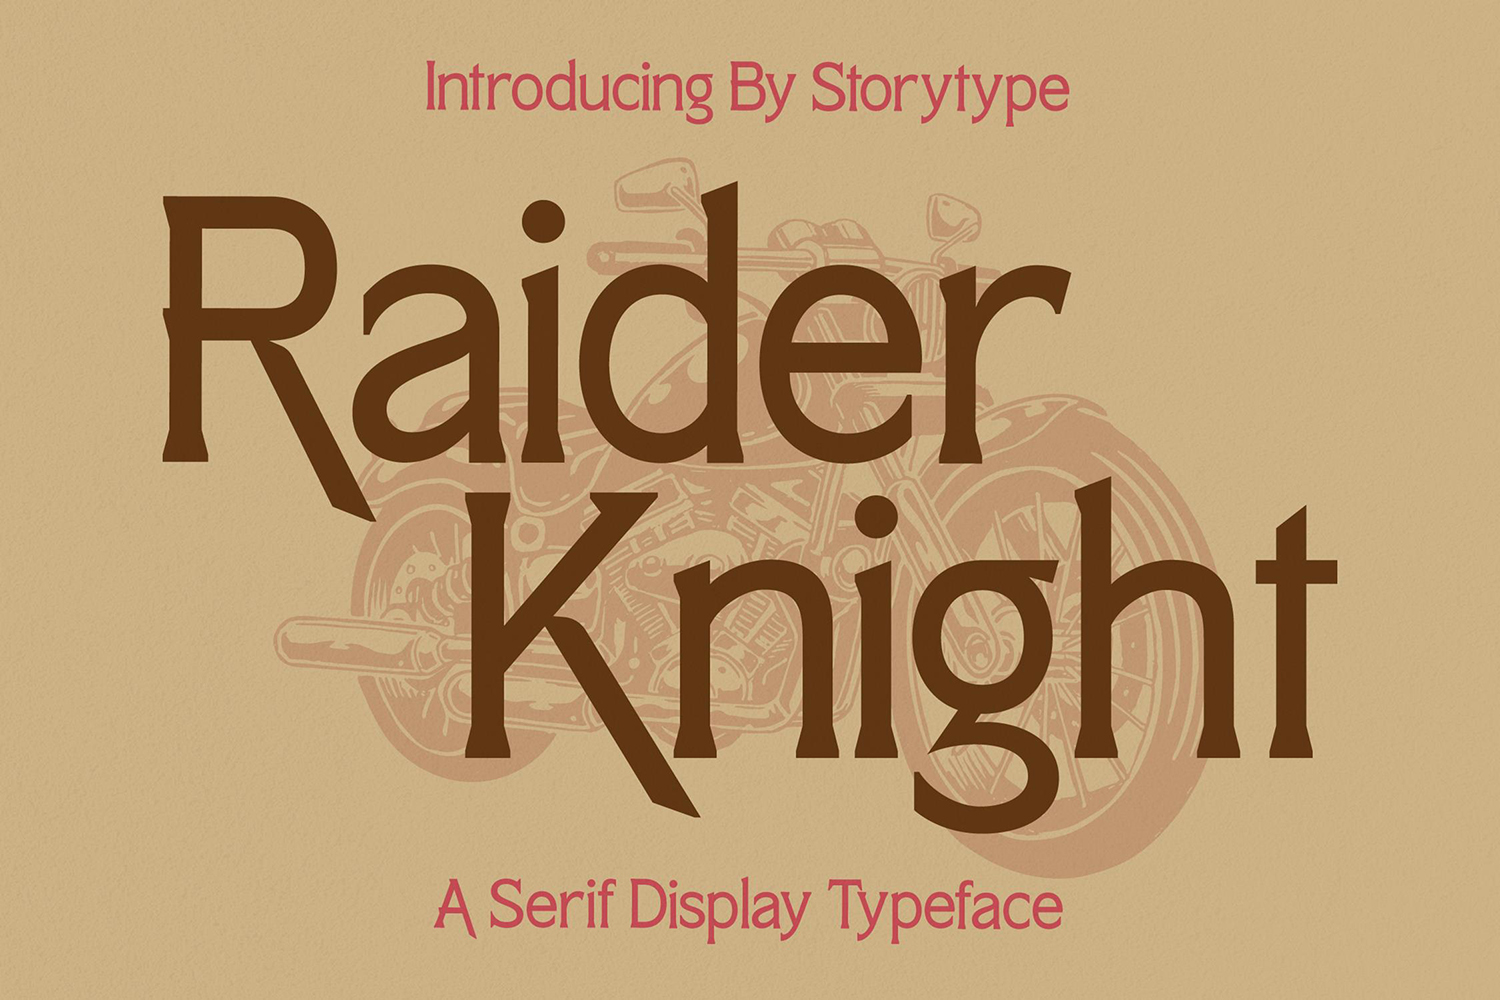 Raider Knight Free Font